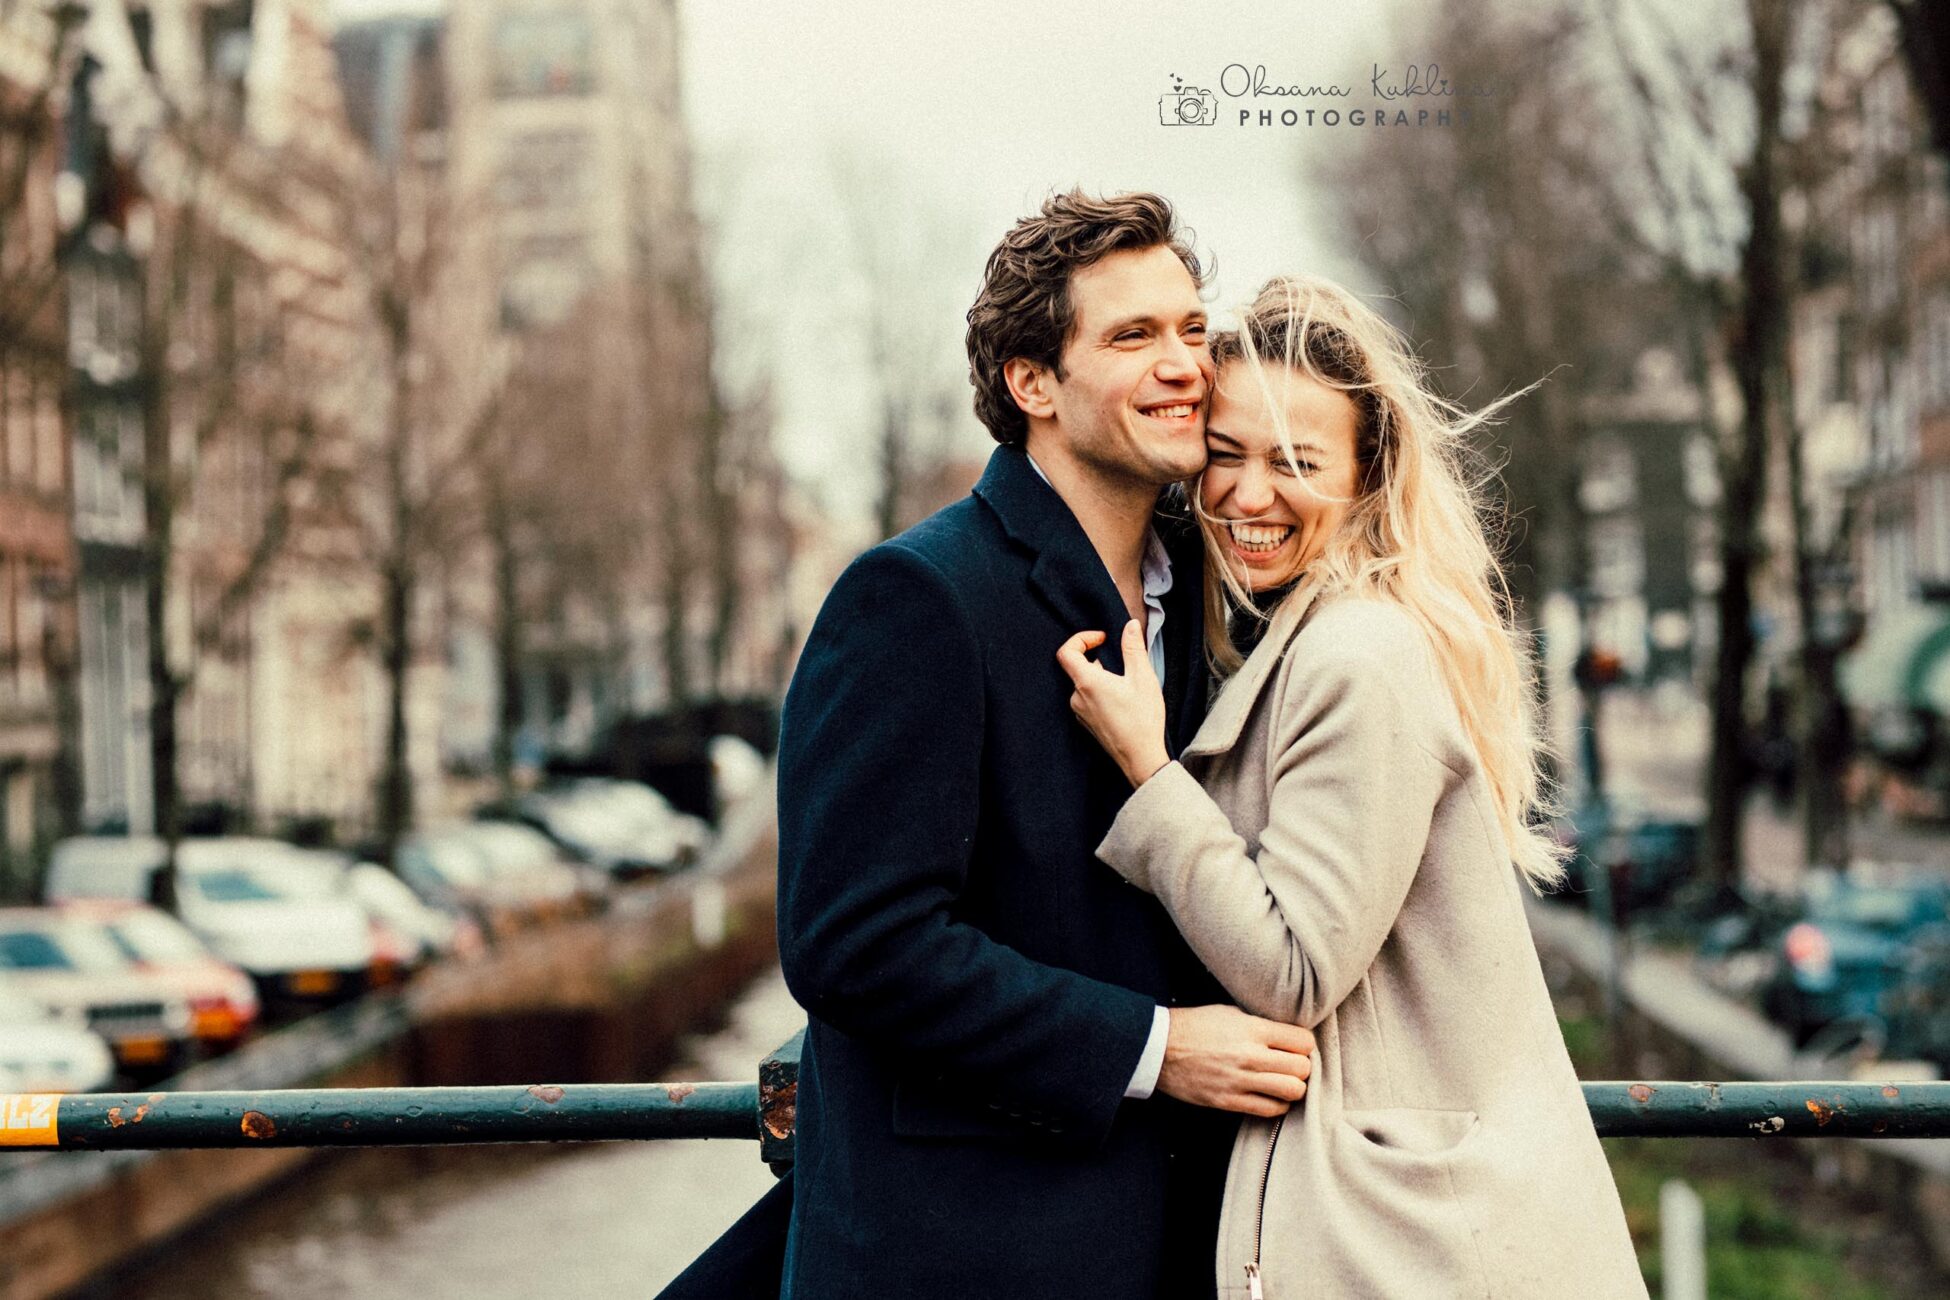 Pre-wedding Photo shoot fotoshoot Engagement Verloving Trouwfotograaf Trouw Fotograaf Bruiloft Amsterdam